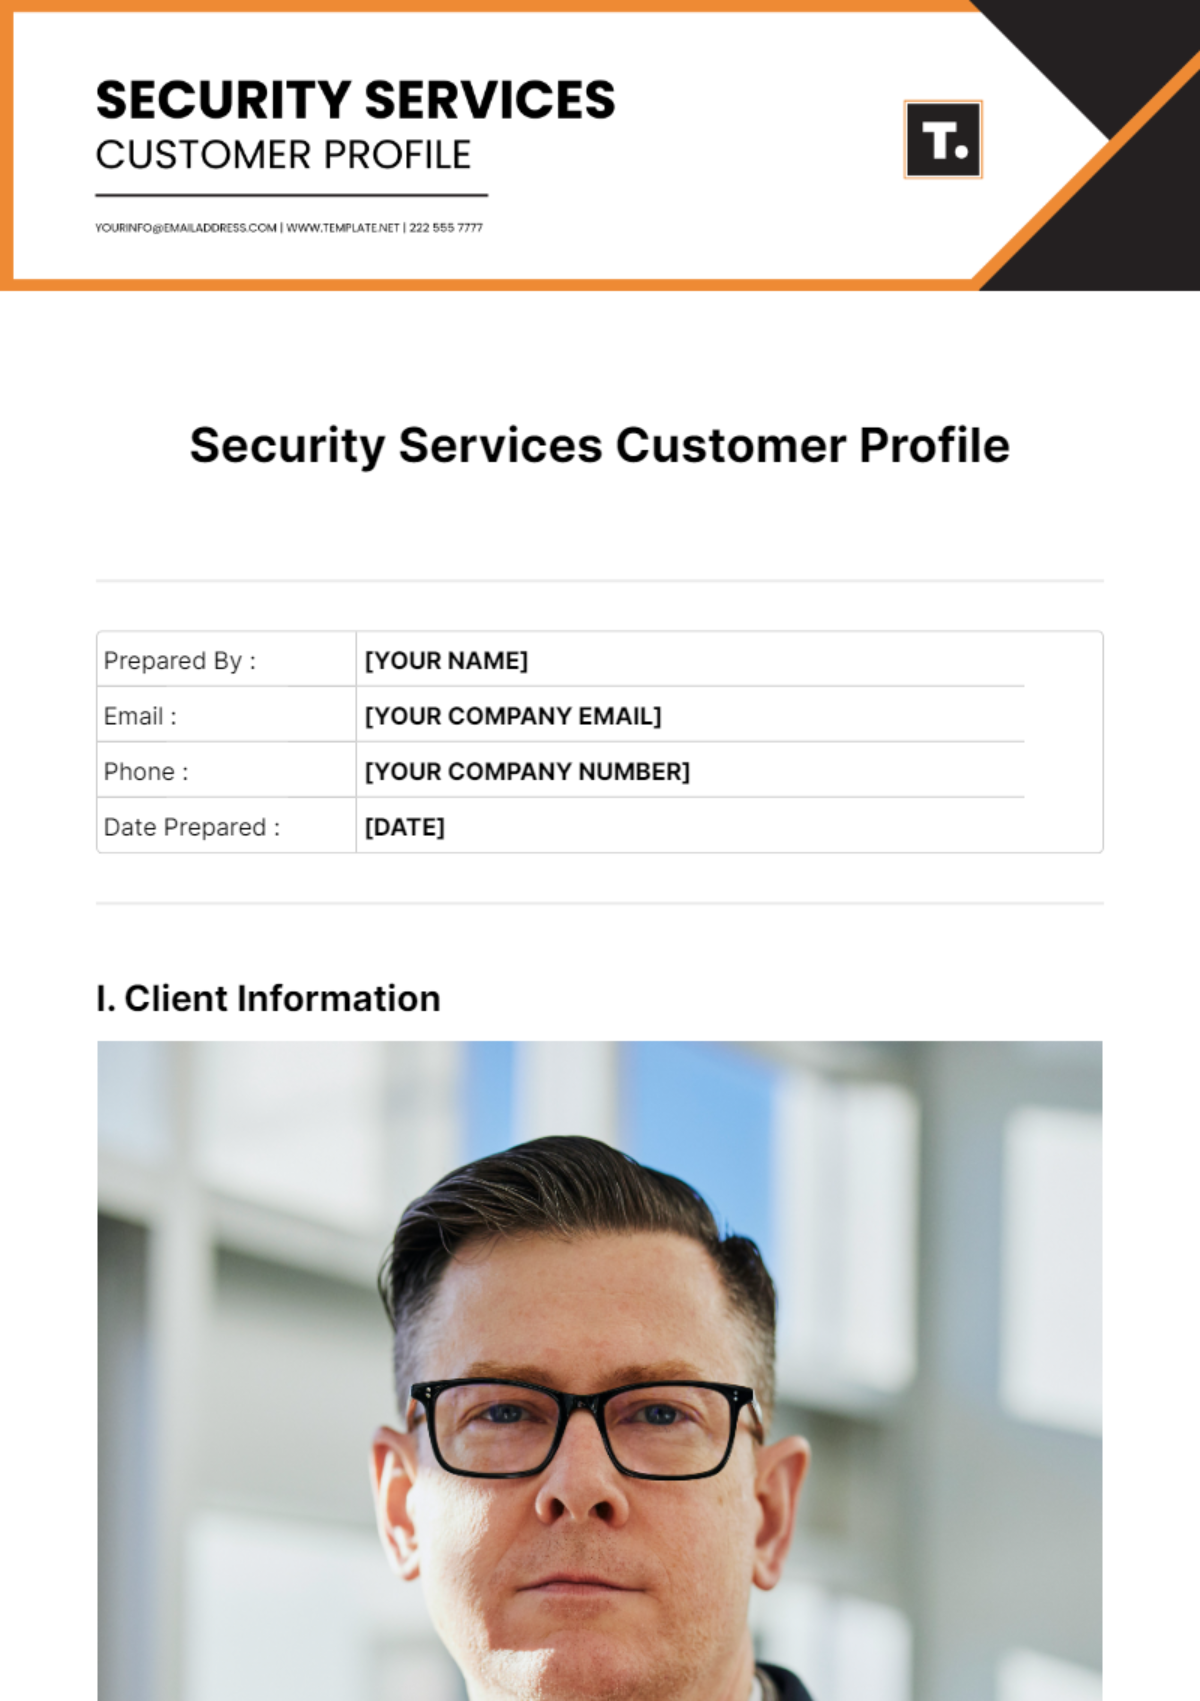 Security Services Customer Profile Template